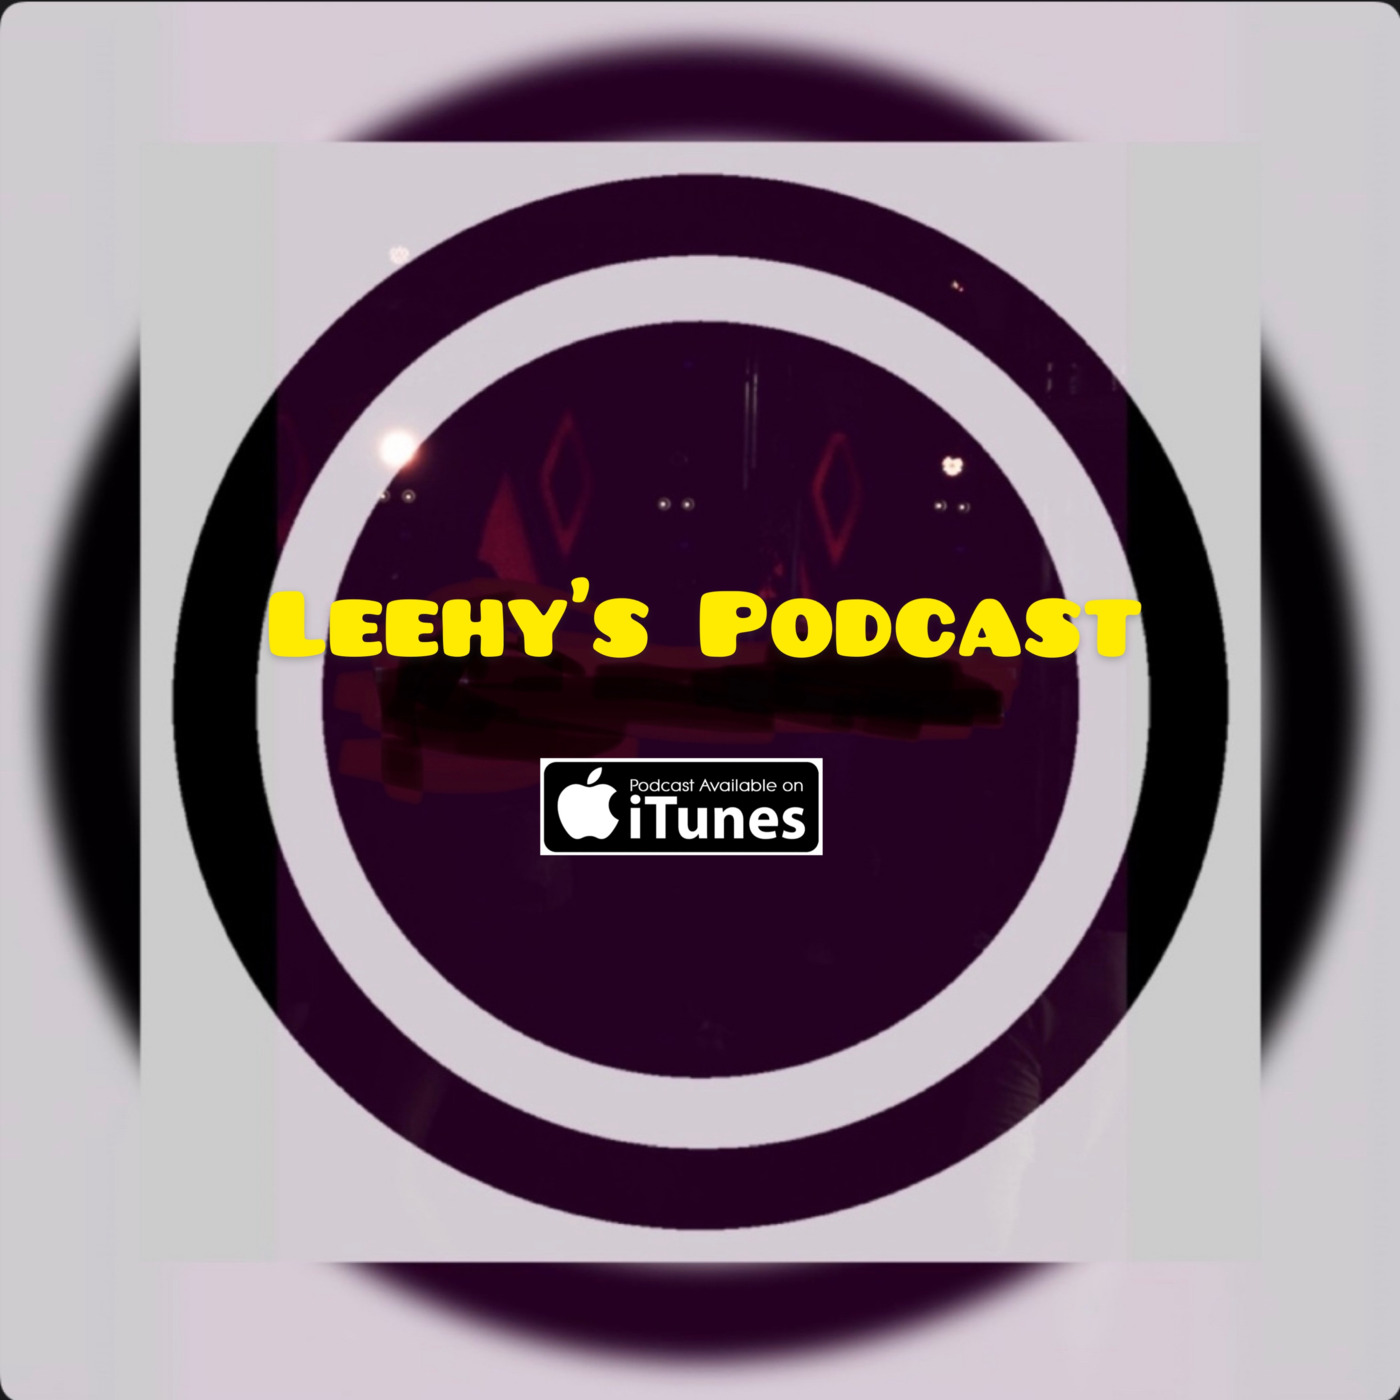 Leehy's Podcast